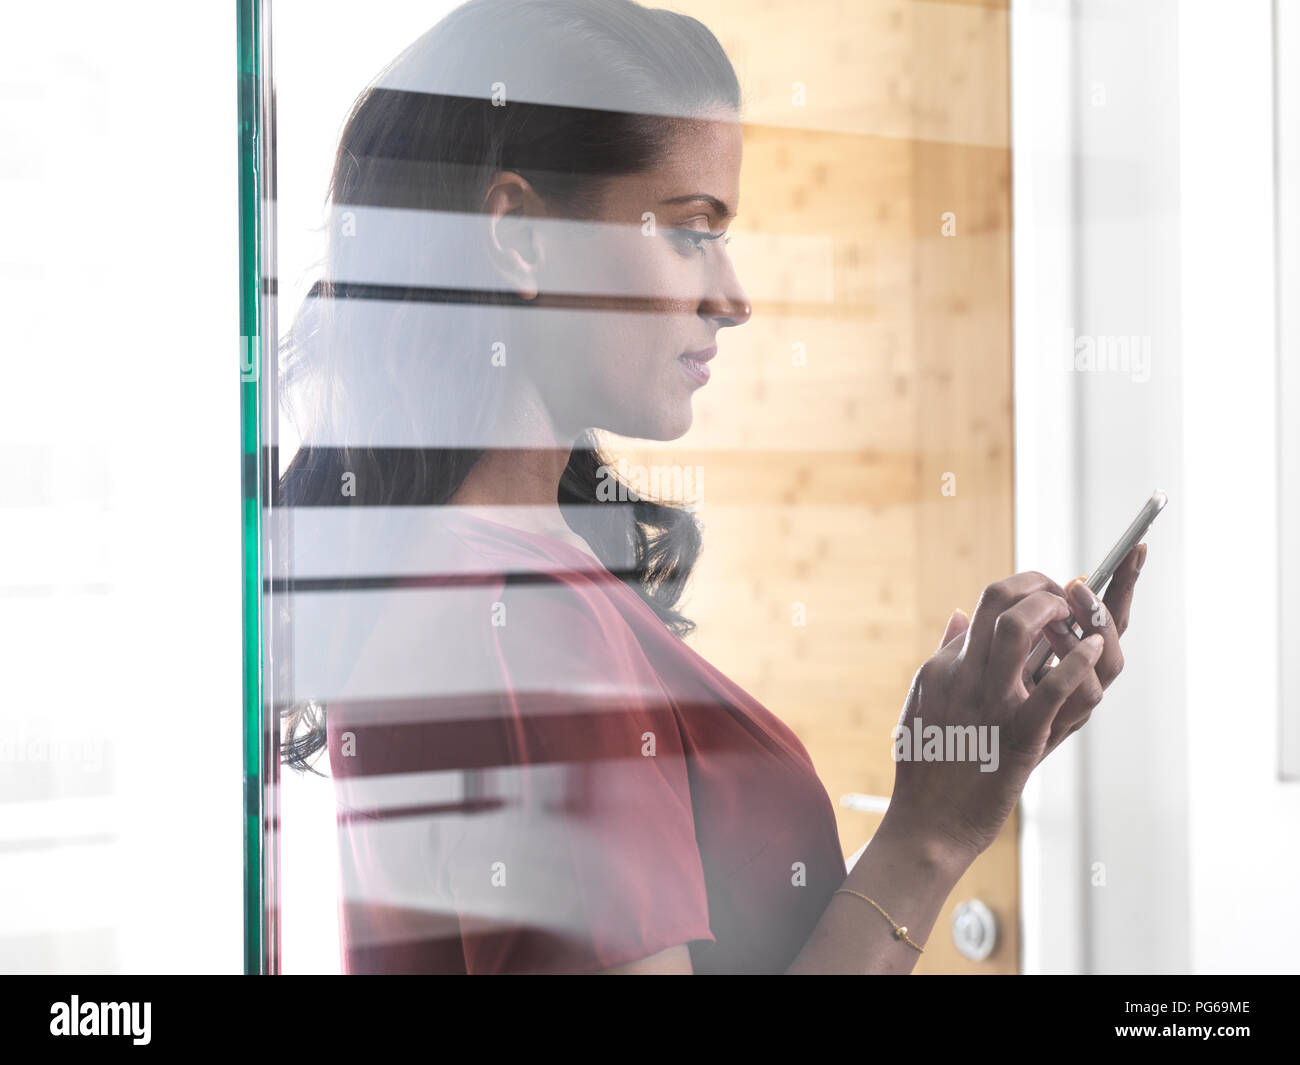 Profile of woman behind glass pane using smartphone Stock Photo